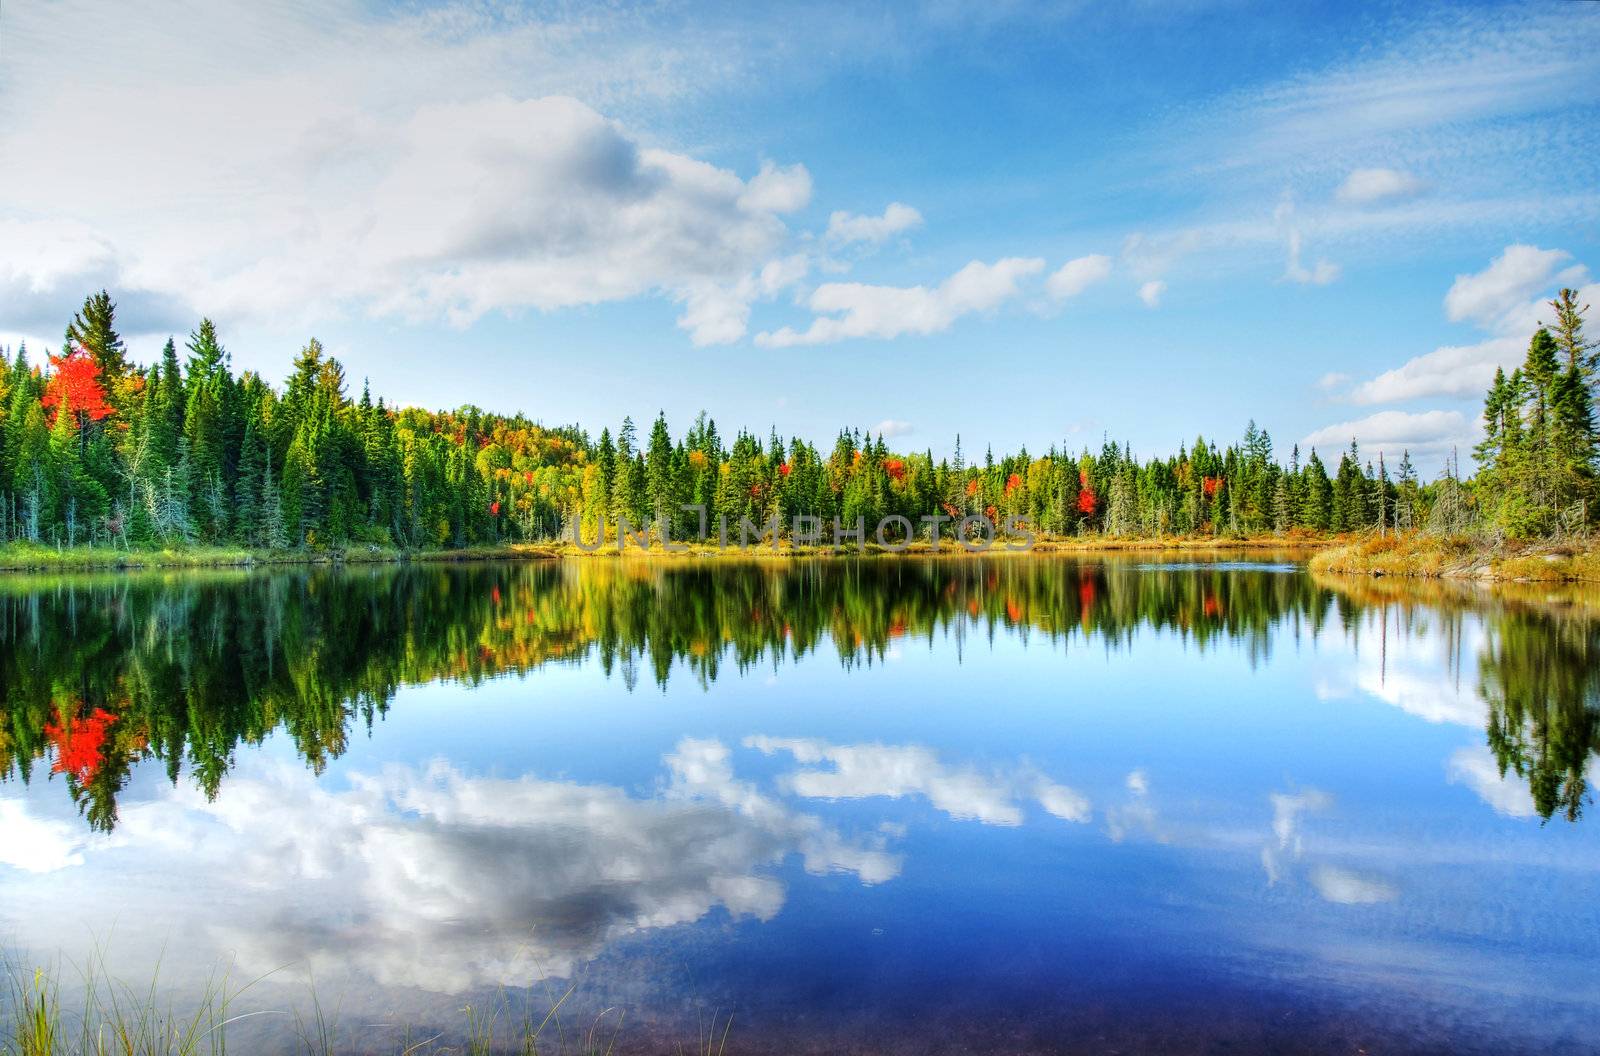 Hdr rendering Fall season at a northern lake  by Mirage3